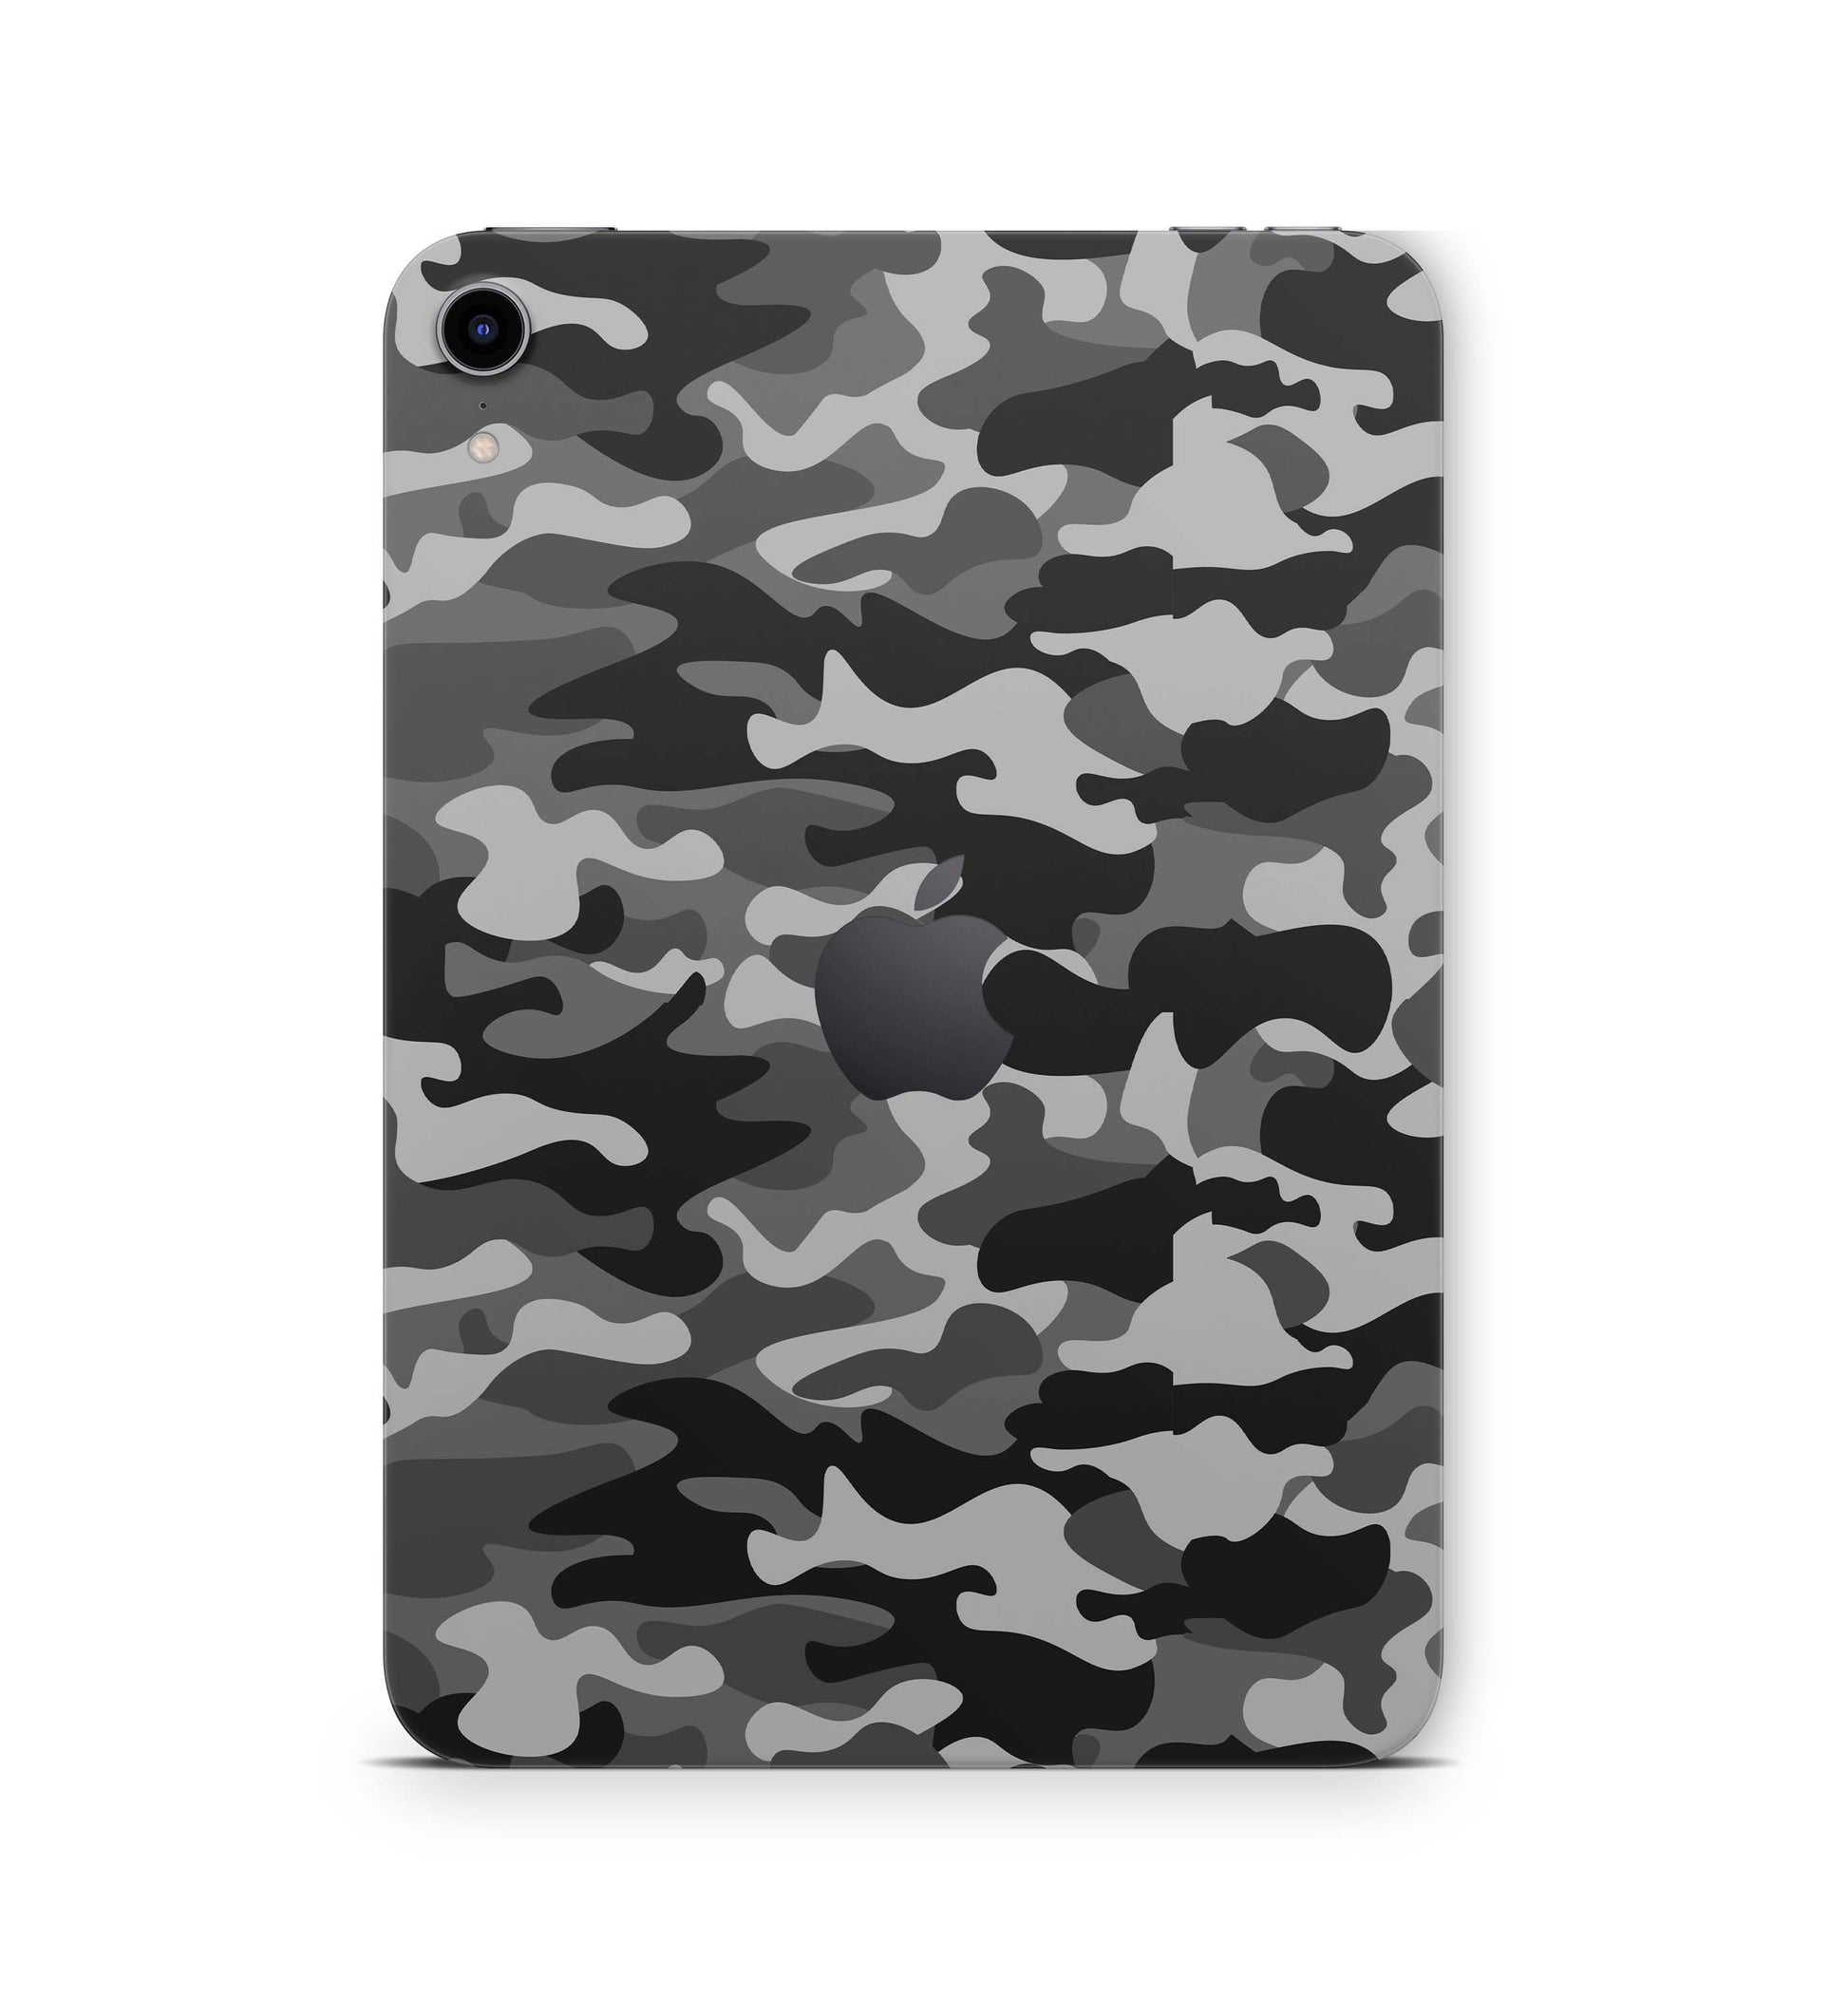 Apple iPad Skin Design Cover Folie Vinyl Skins & Wraps für alle iPad Modelle Aufkleber Skins4u Urban-Camo  